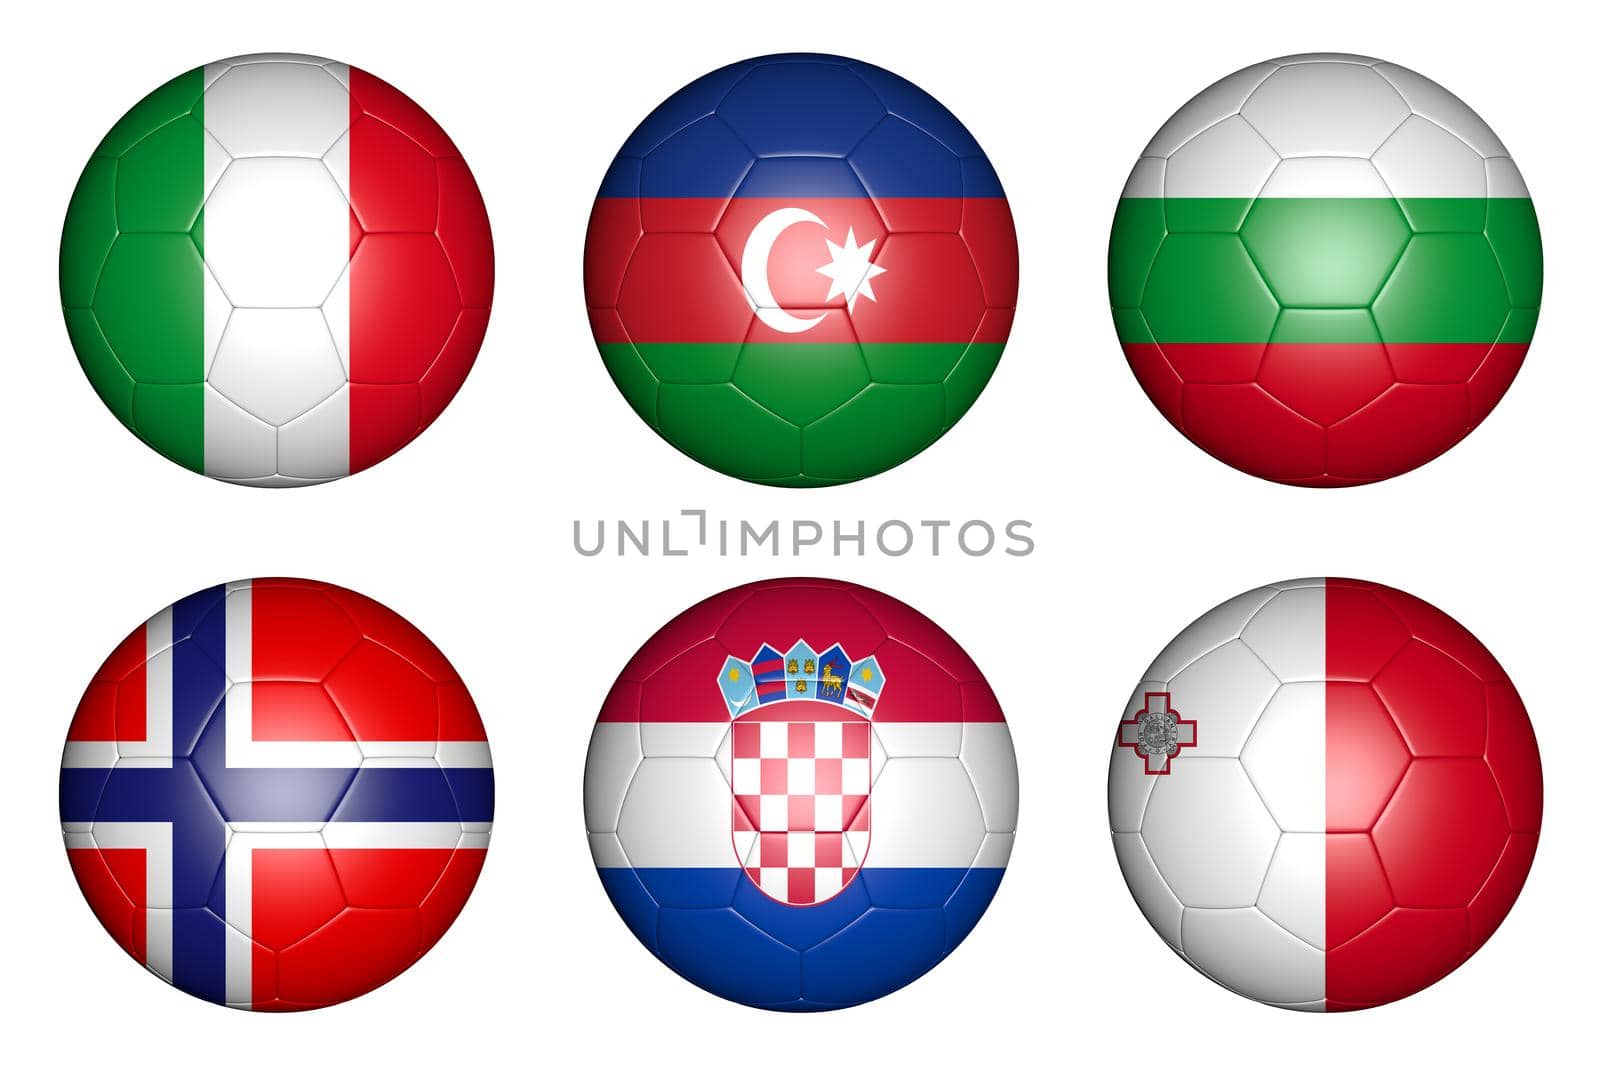 balls with flags of countries: Italy, Croatia, Norway, Bulgaria, Azerbaijan, Malta.